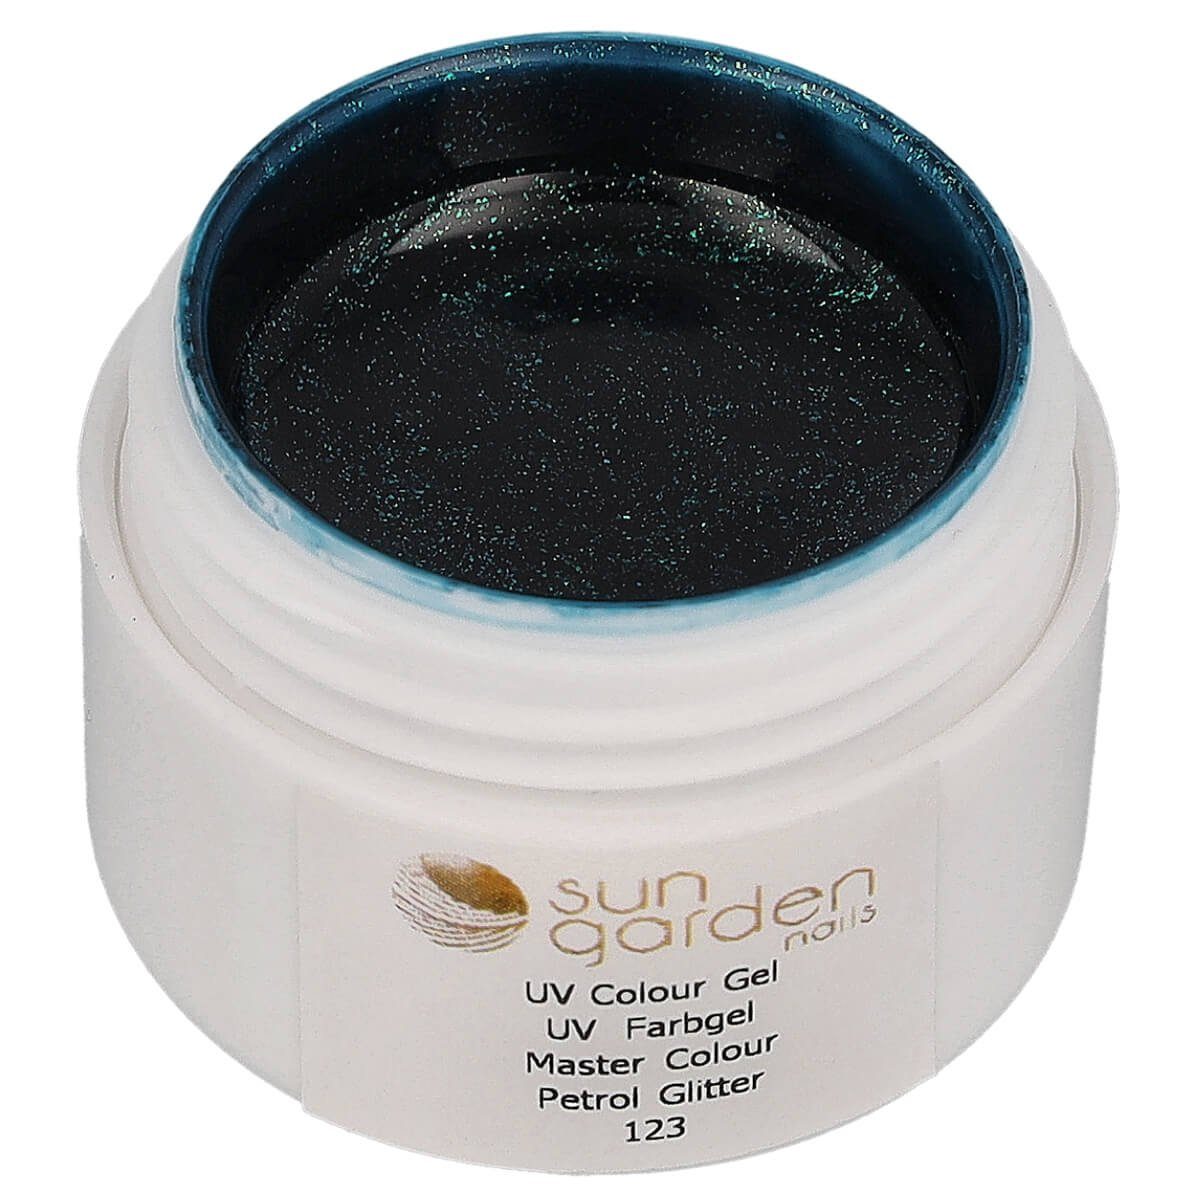 5 Sun N°123 UV-Gel ml Color Nails Gel Garden Petrol - UV Glitter Farbgel Master -